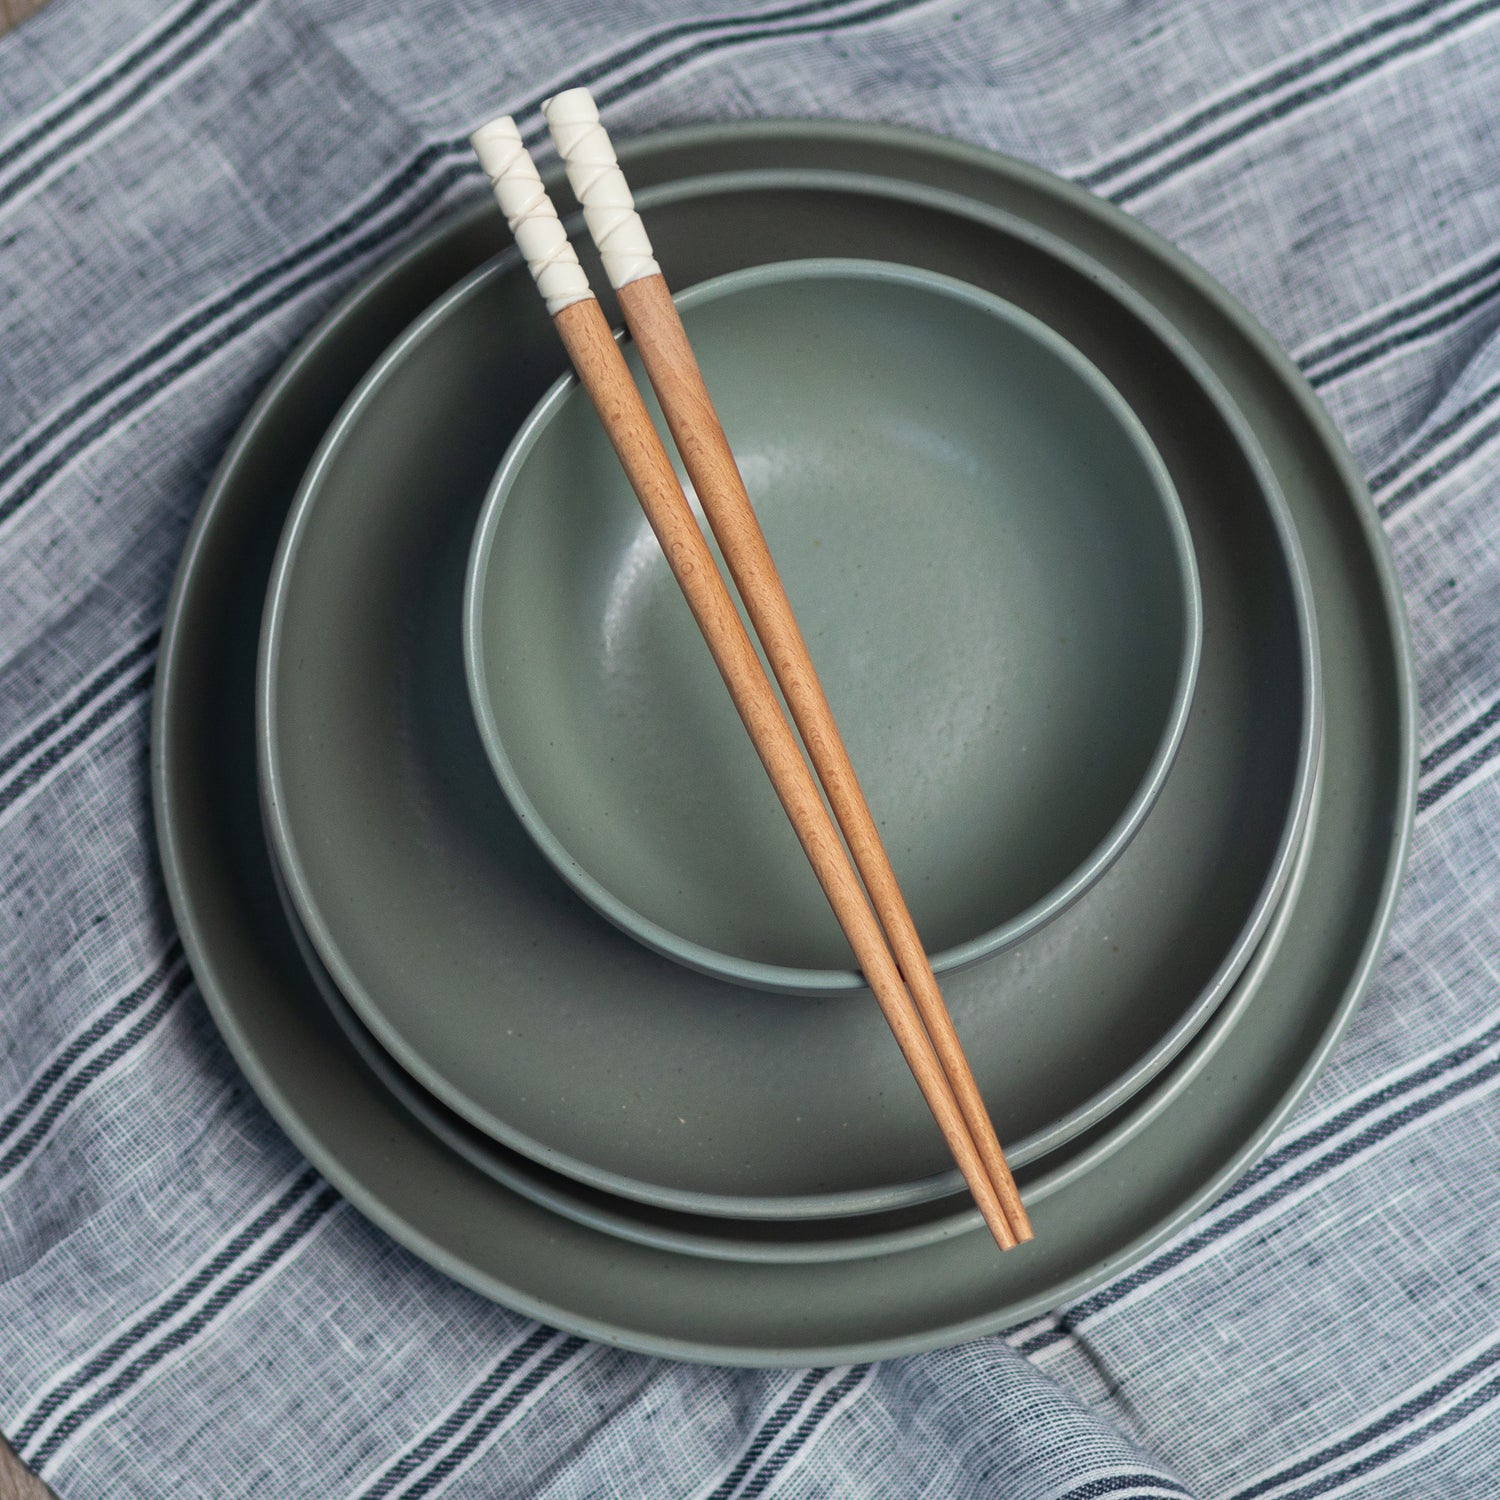 Pacifica Dinner Plate, Artichoke, Set of 6